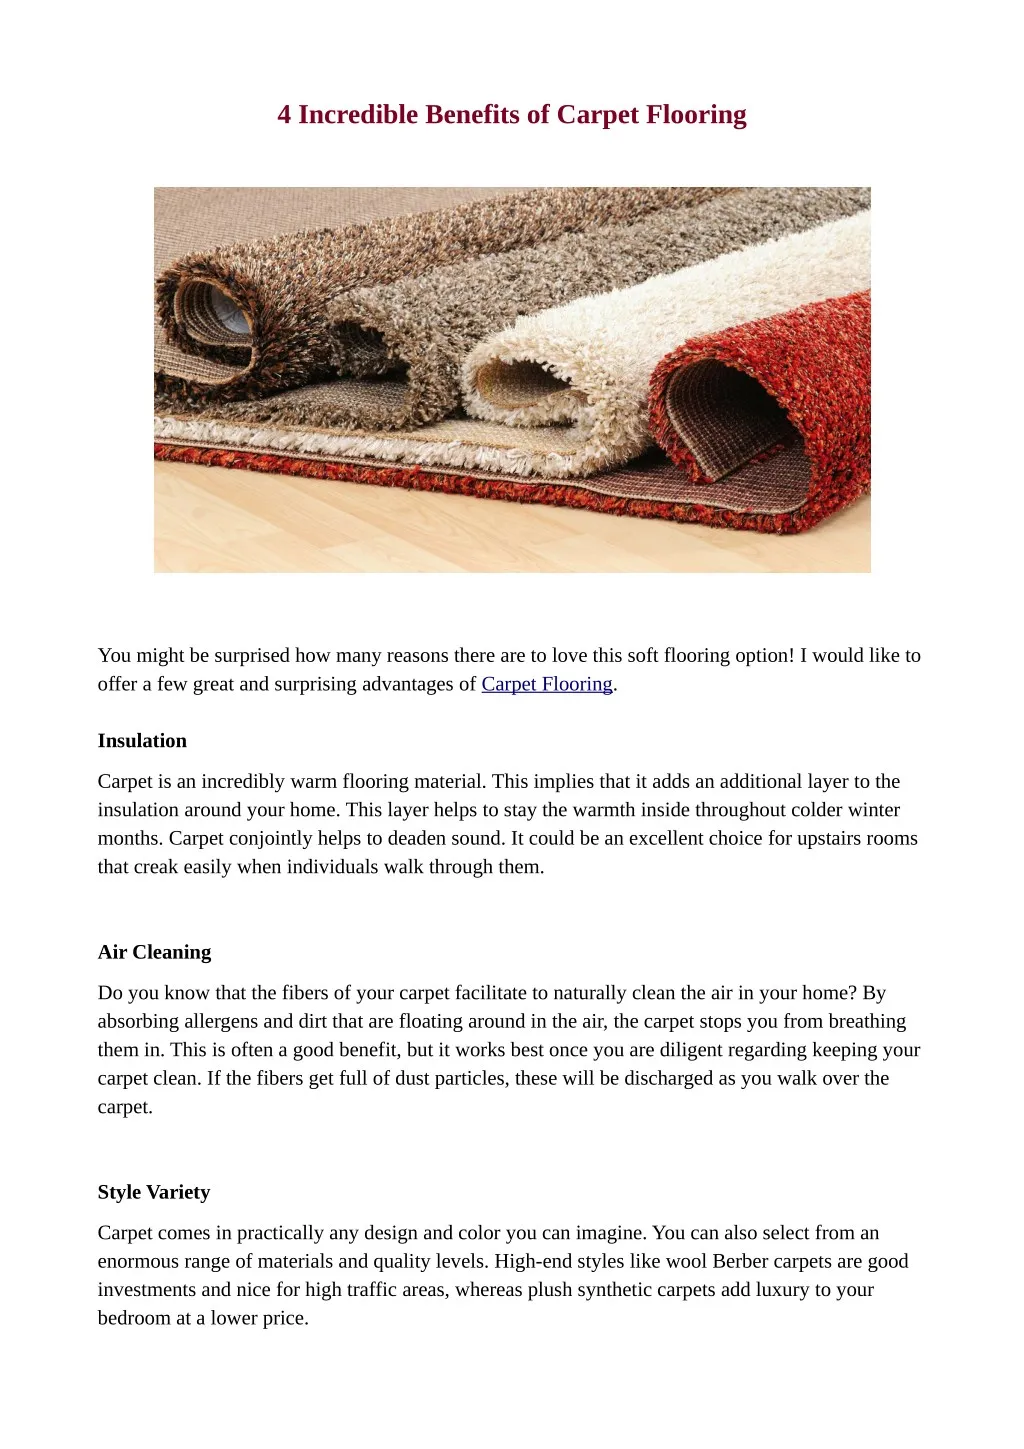 4 incredible benefits of carpet flooring